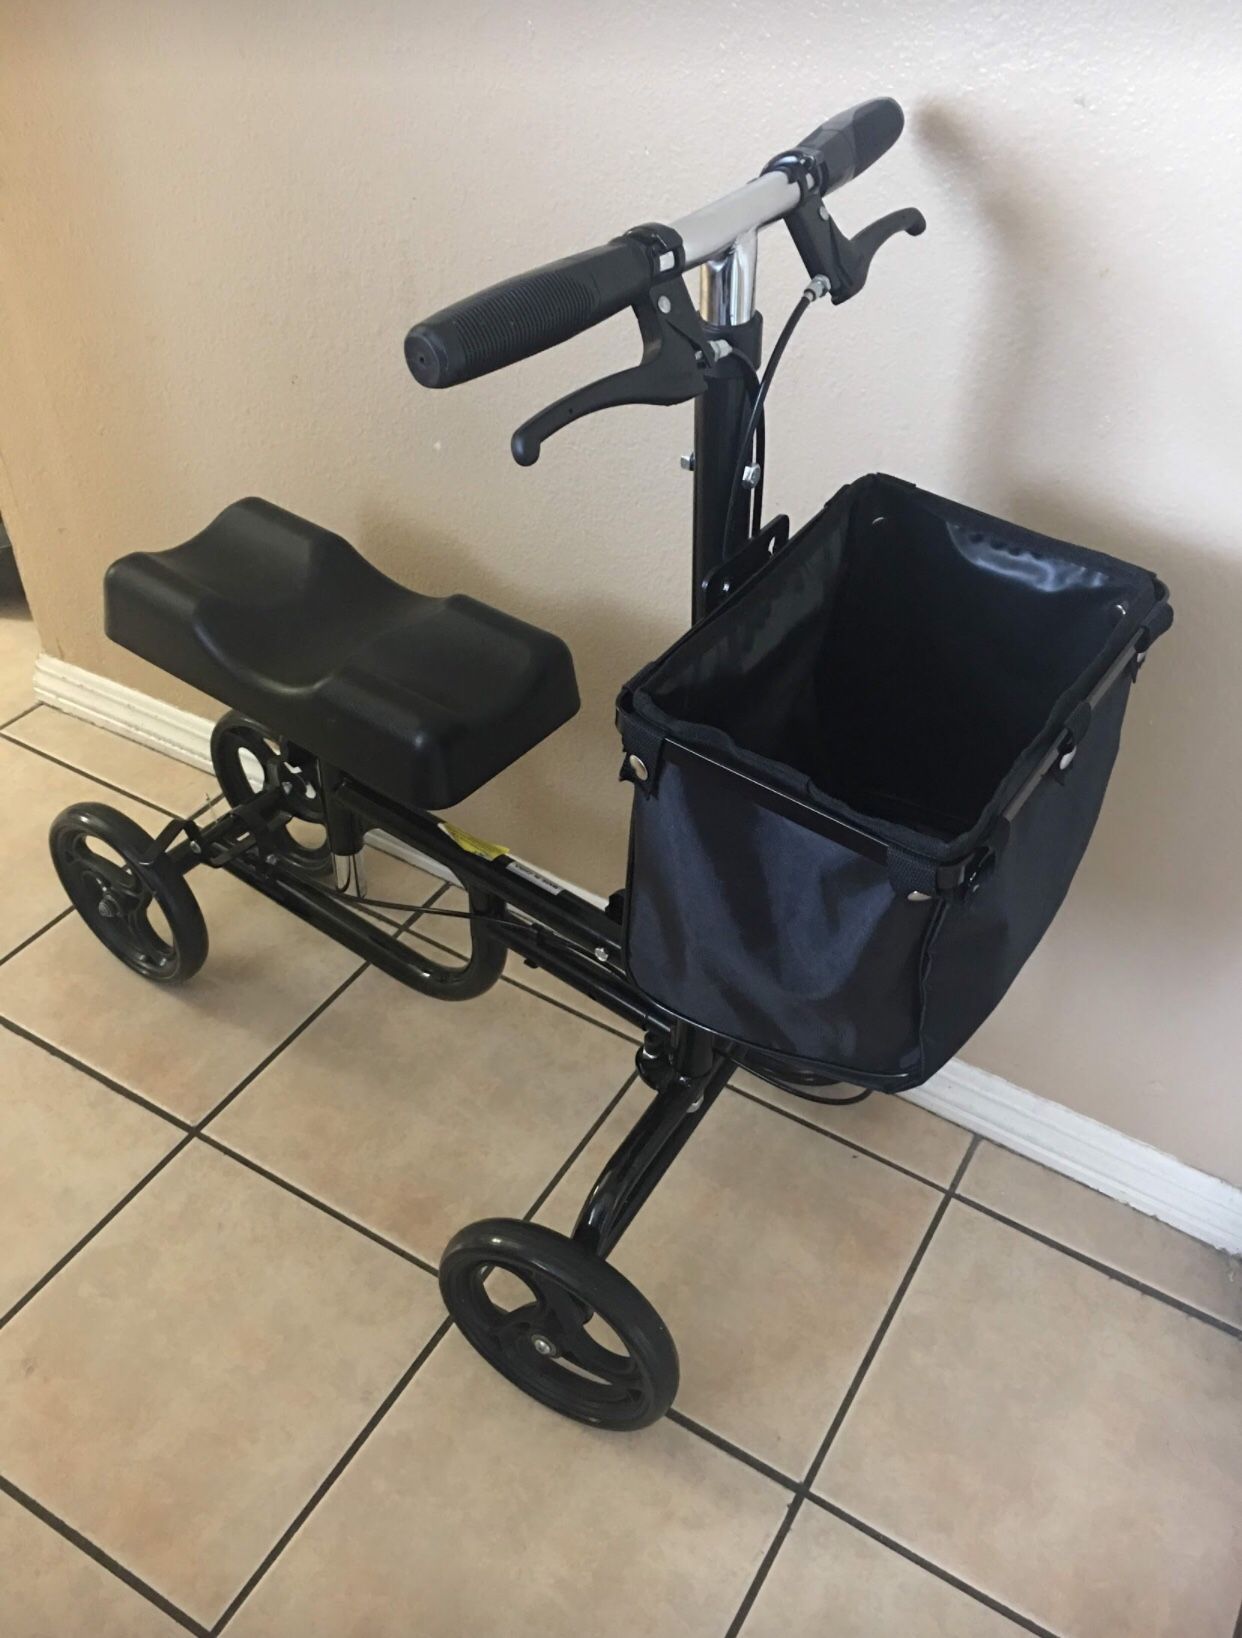 Giantex steerable foldable knee walker scooter turning brake basket drive cart black